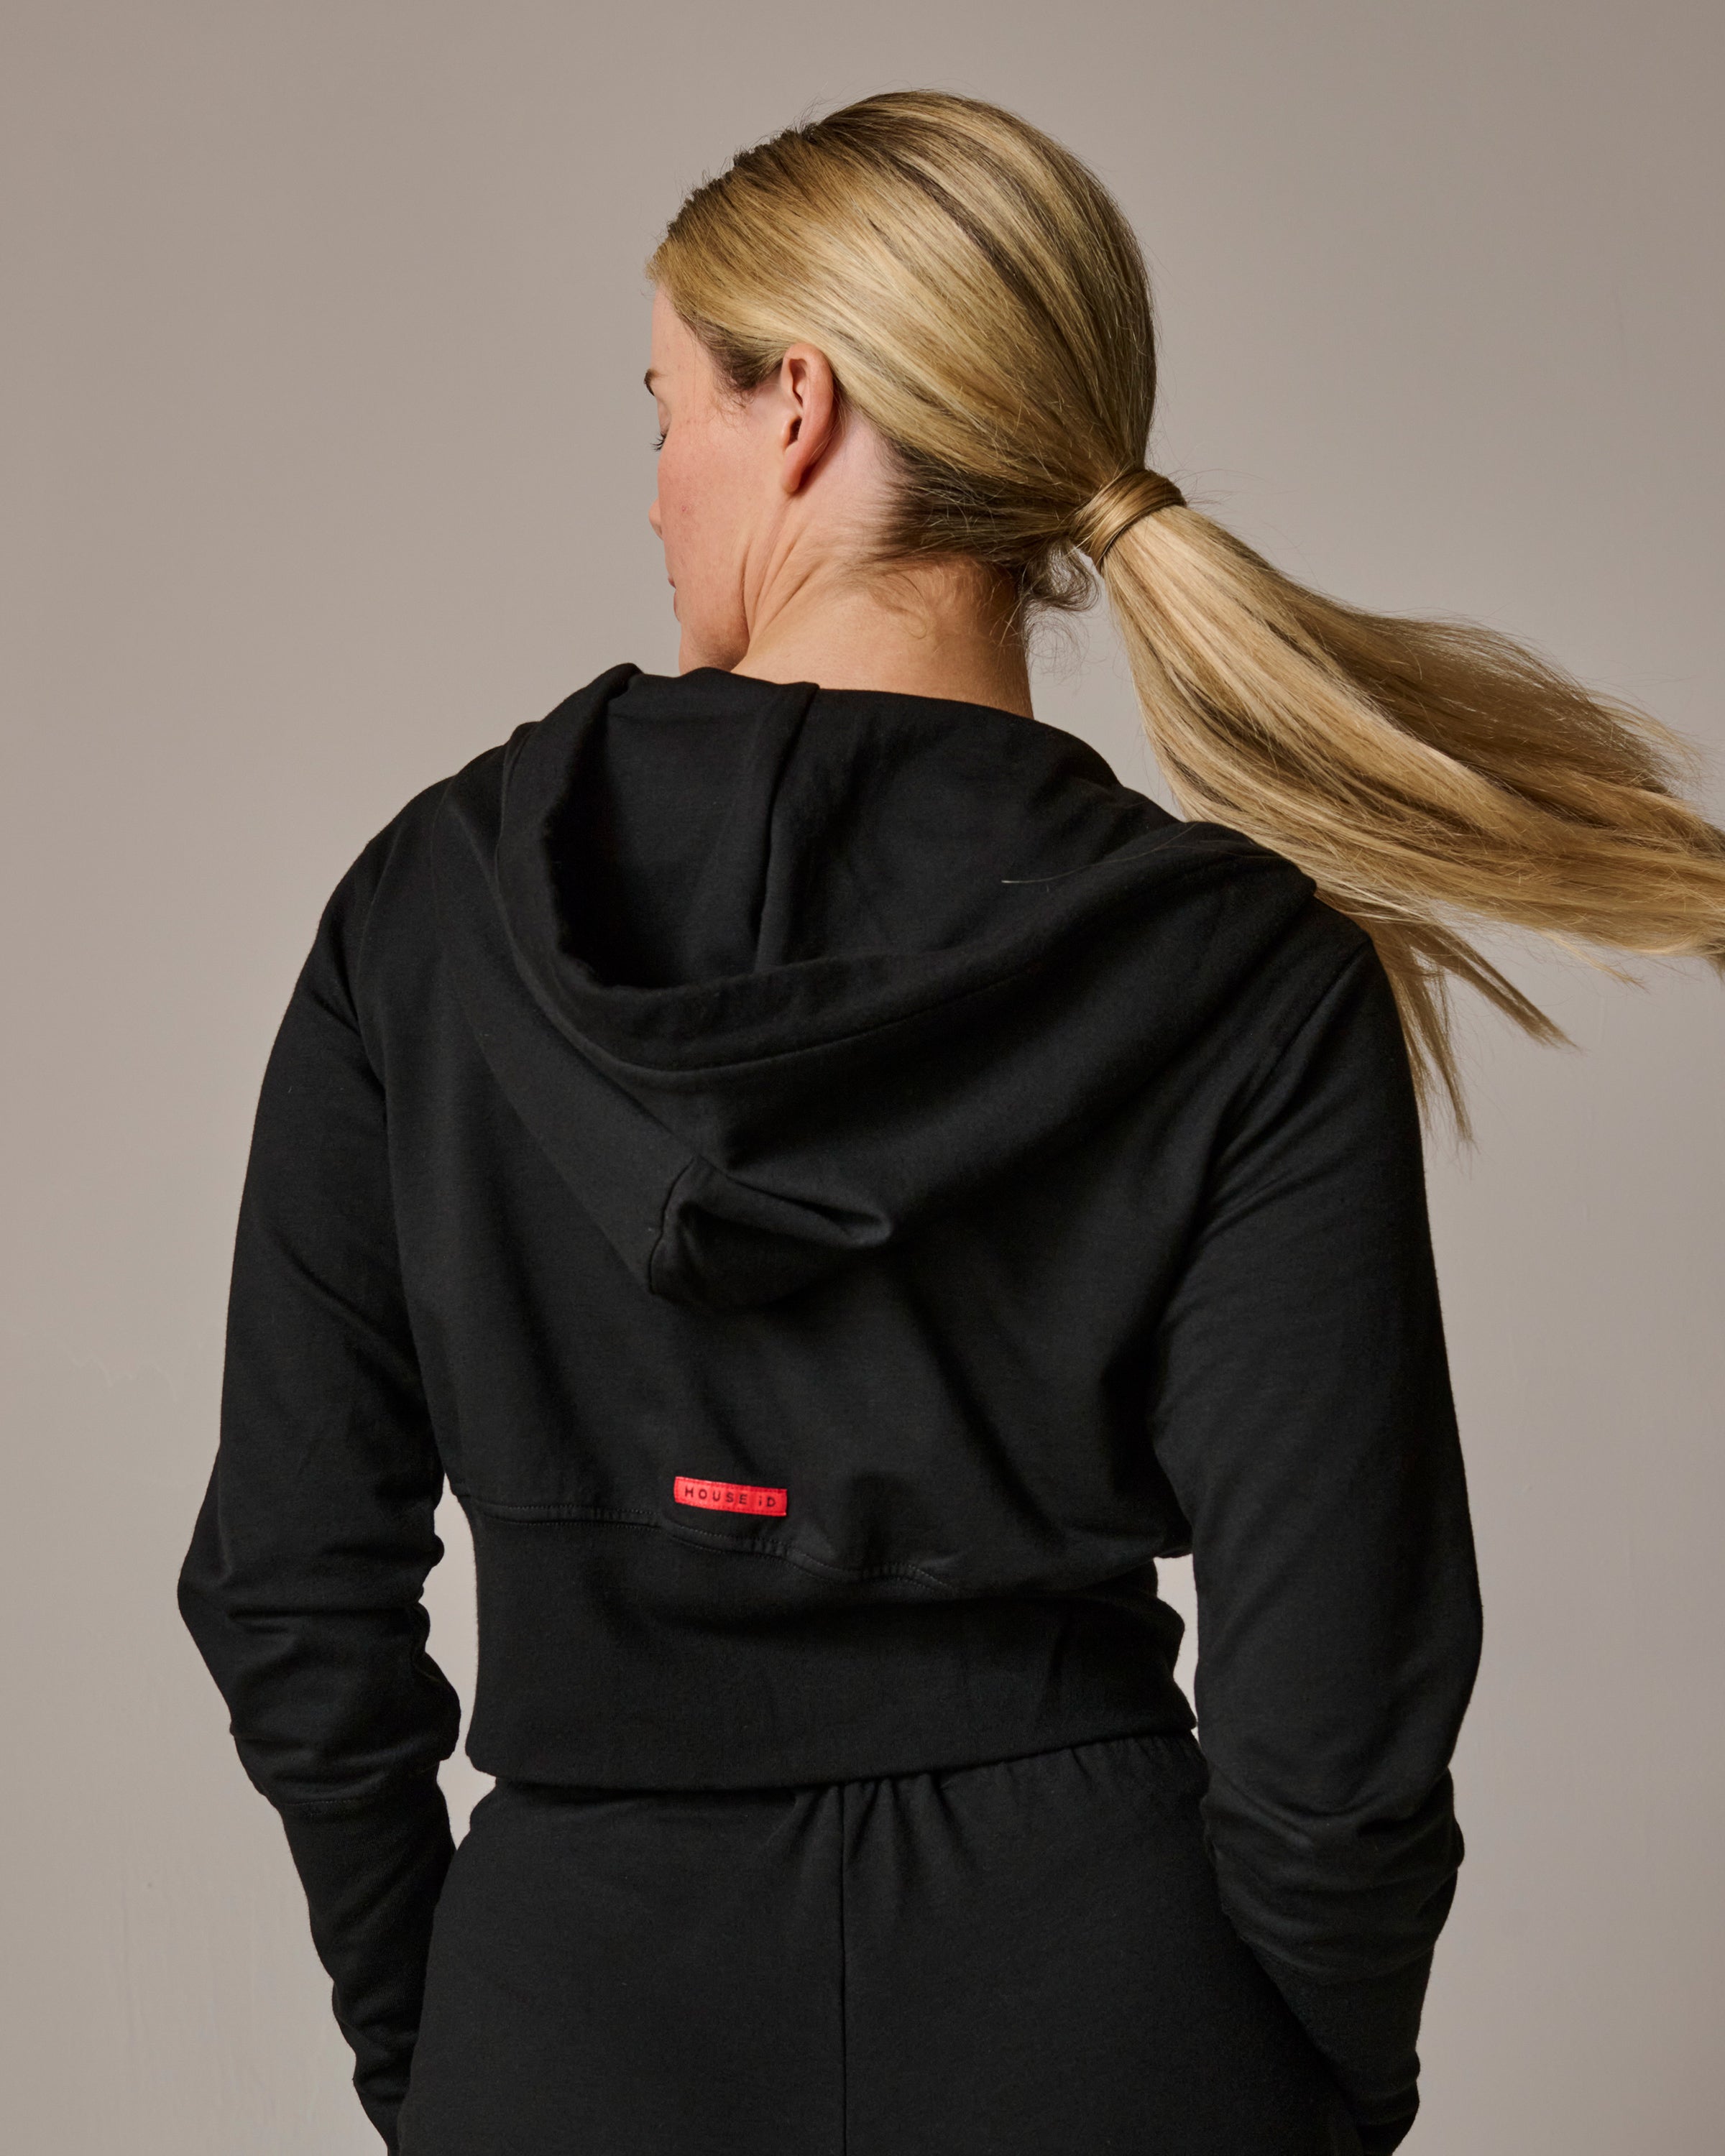 Womens jersey zip up hoodie in black